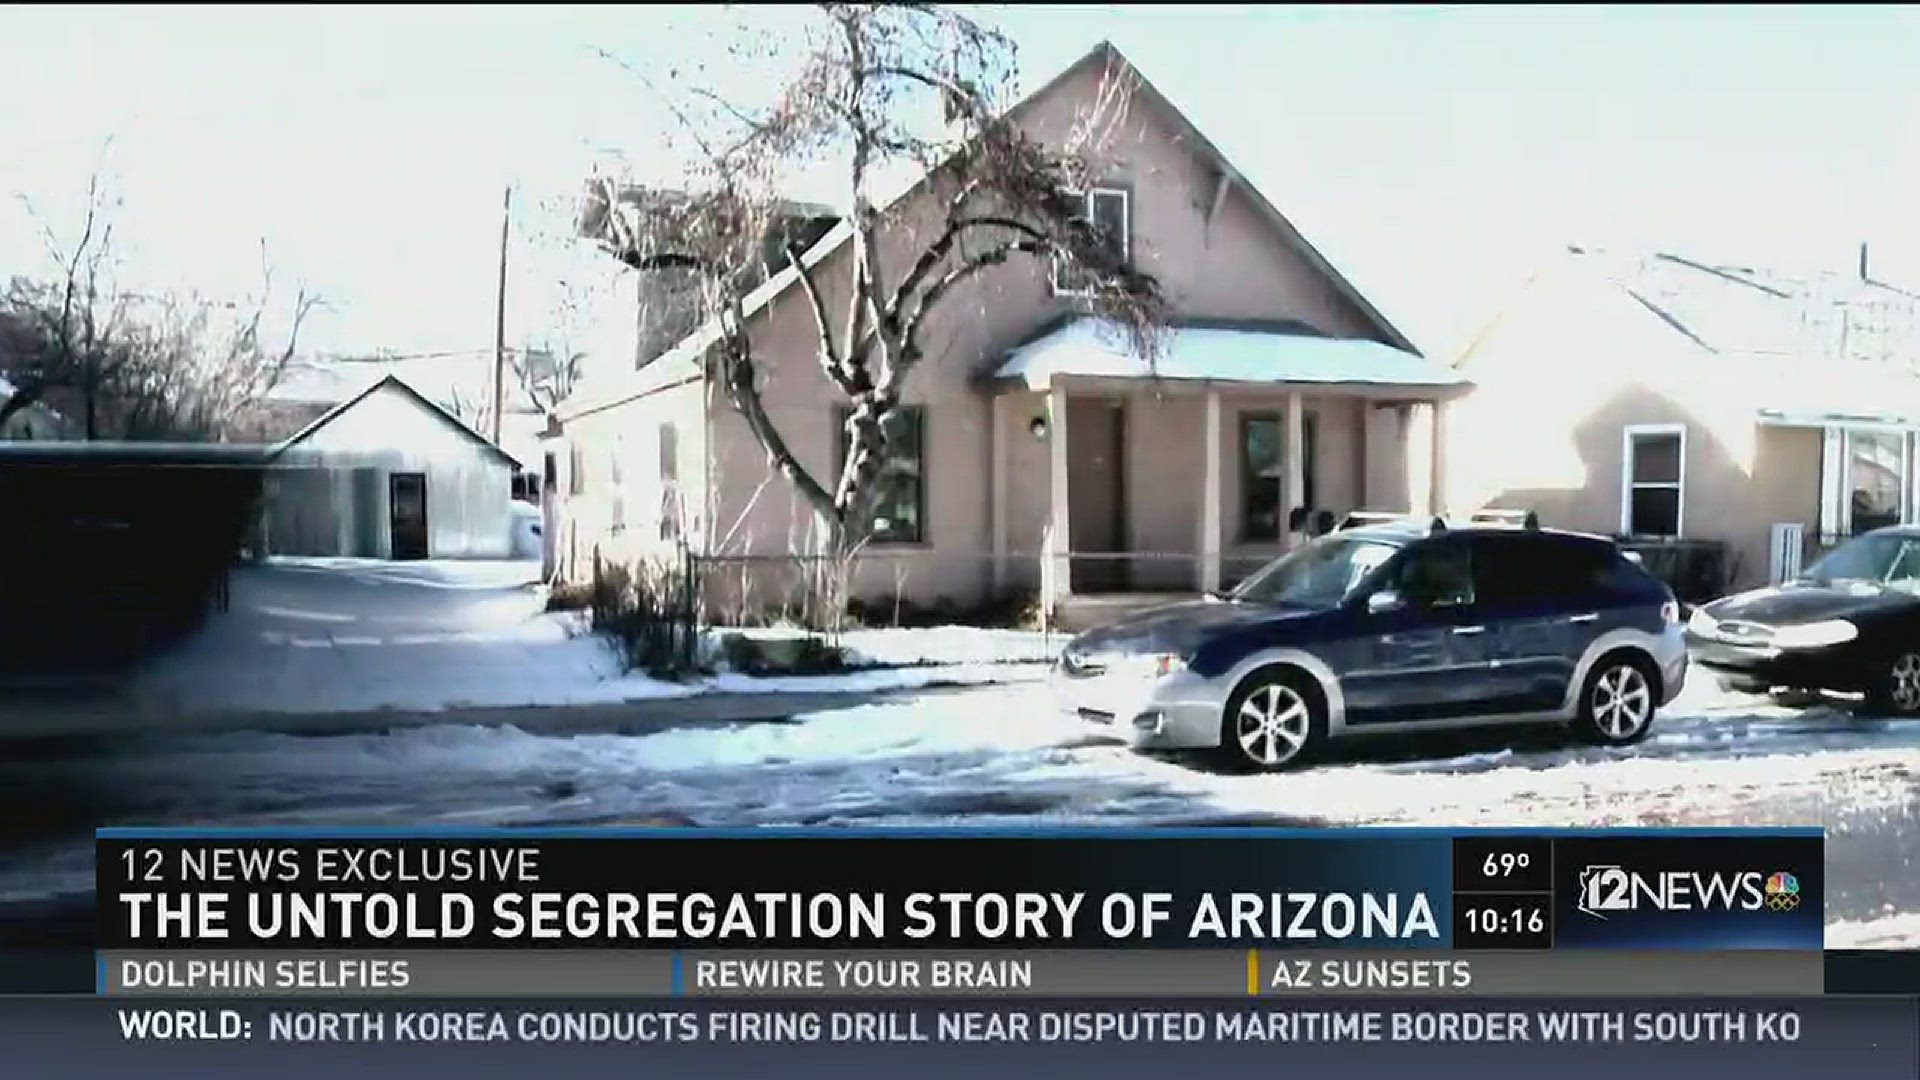 The untold segregation story: Arizona